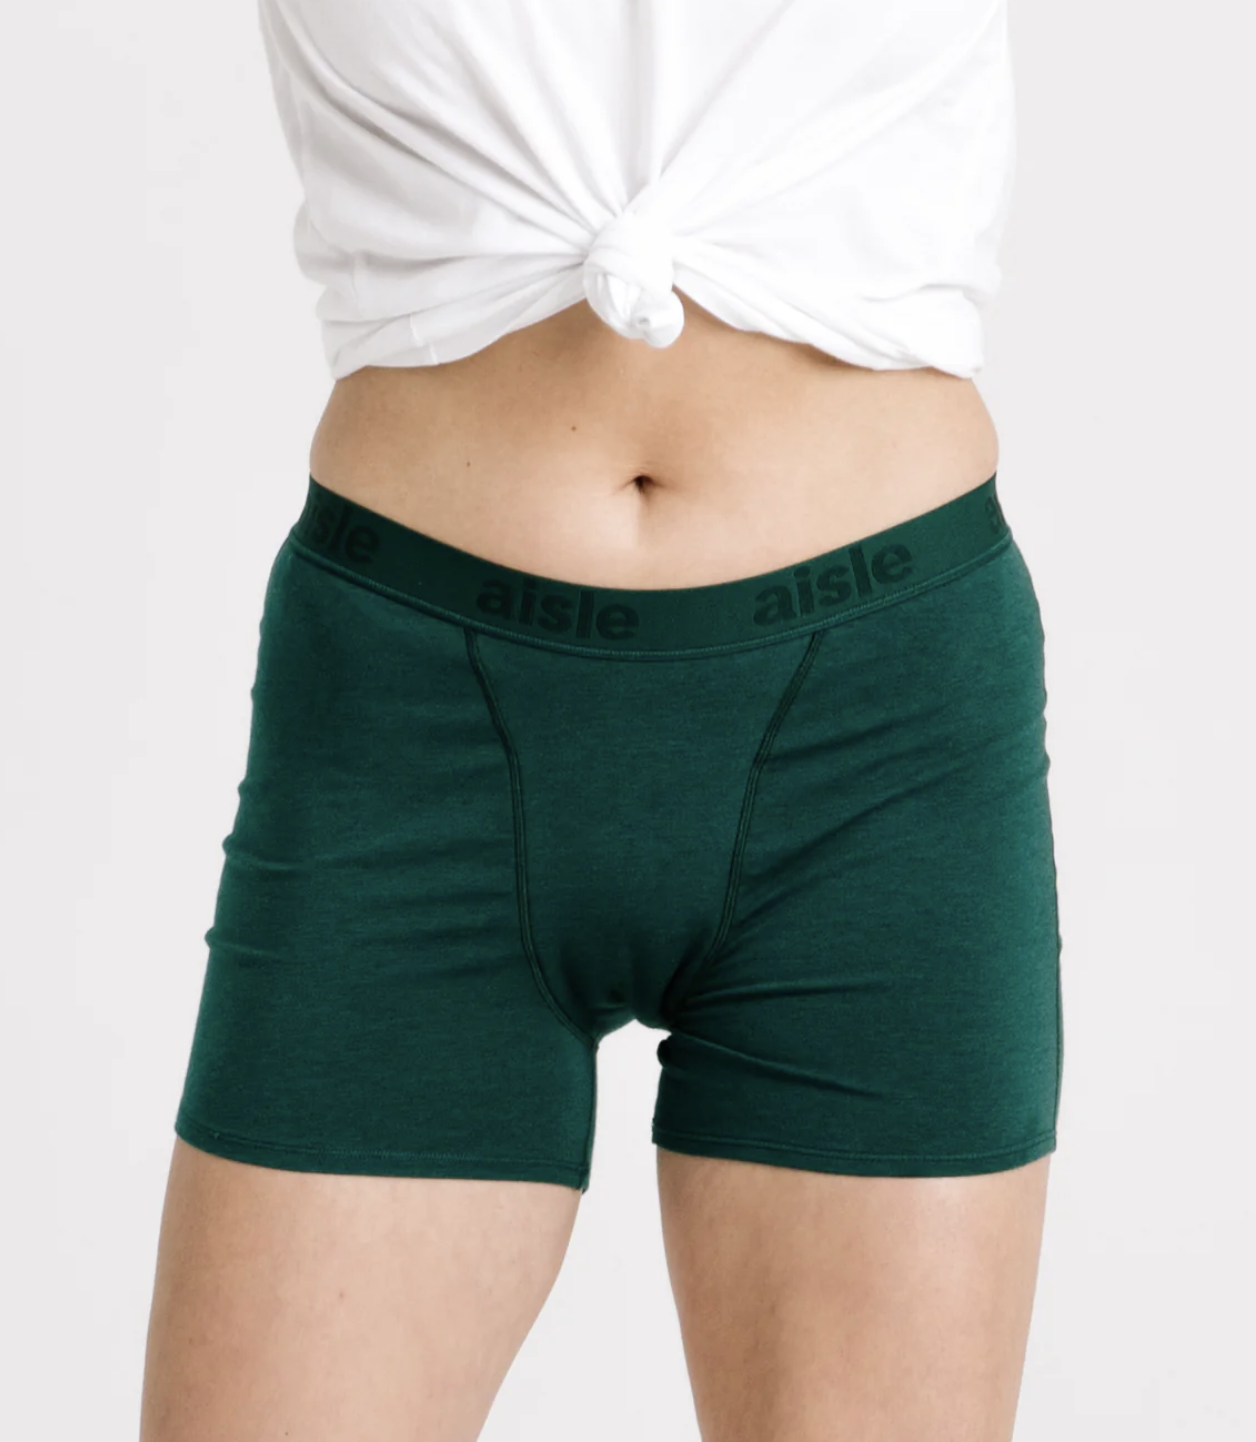 Aisle BOOST Boxer - The Panty Spot